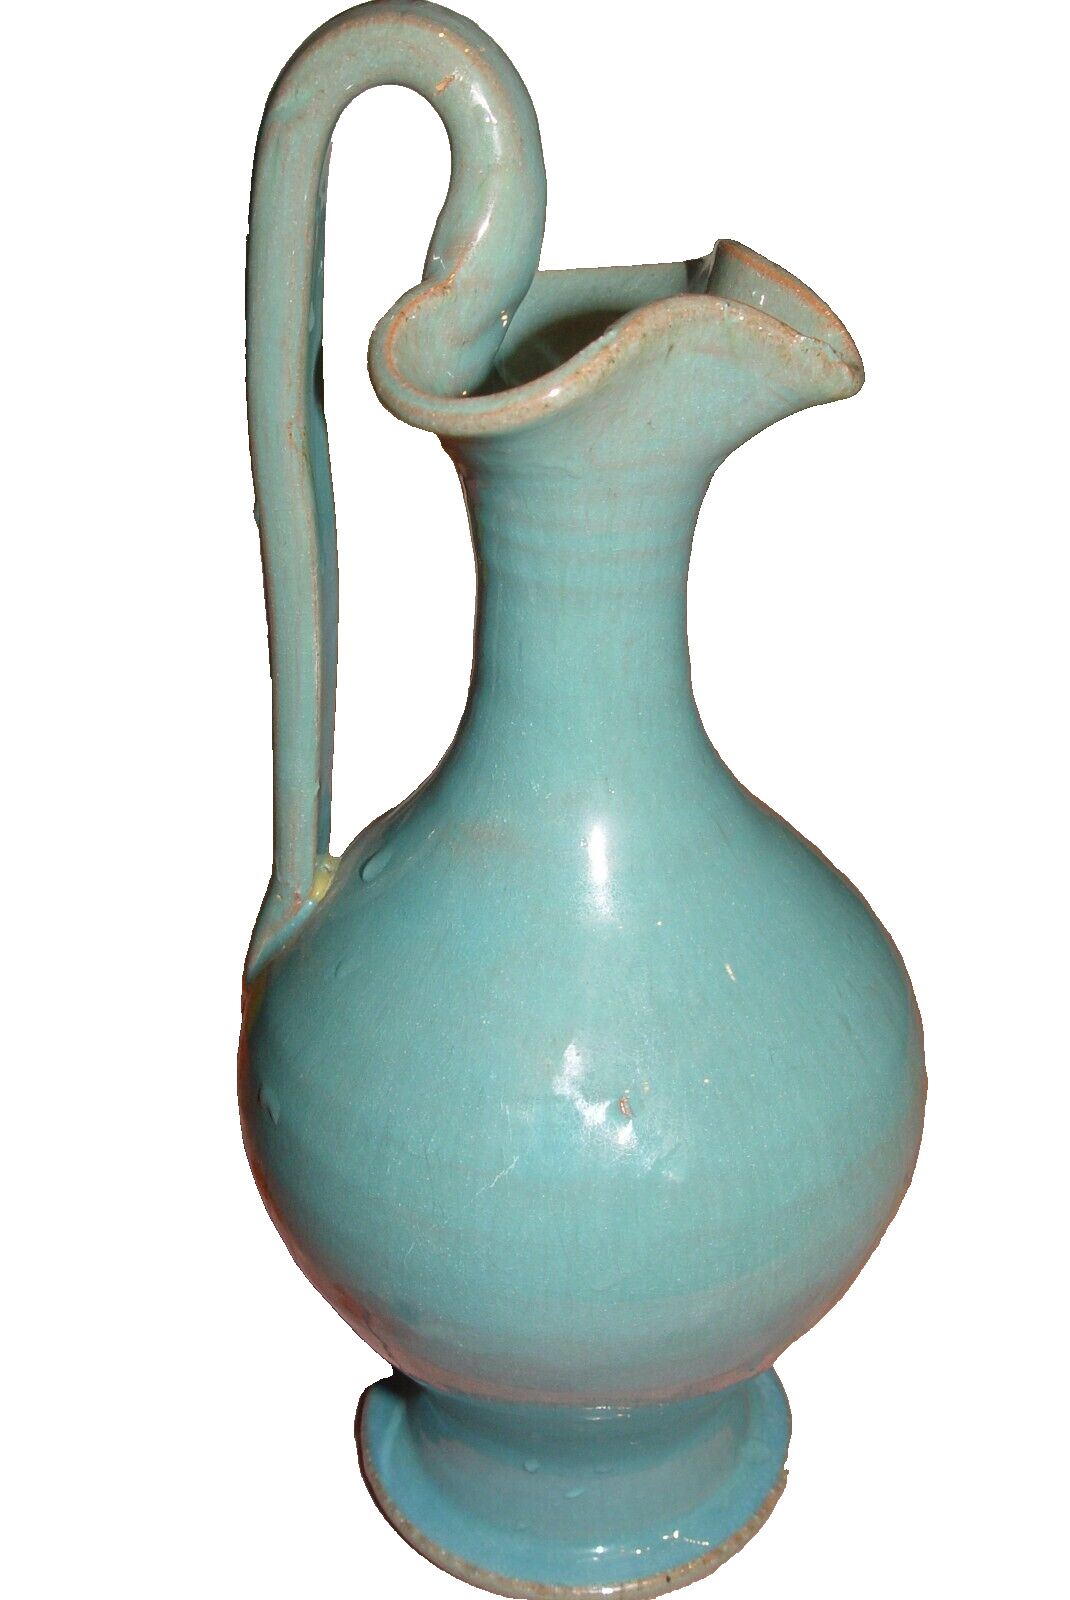 M.L. Owens Seagrove Pottery North Carolina Rebecca Pitcher Turquoise RARE